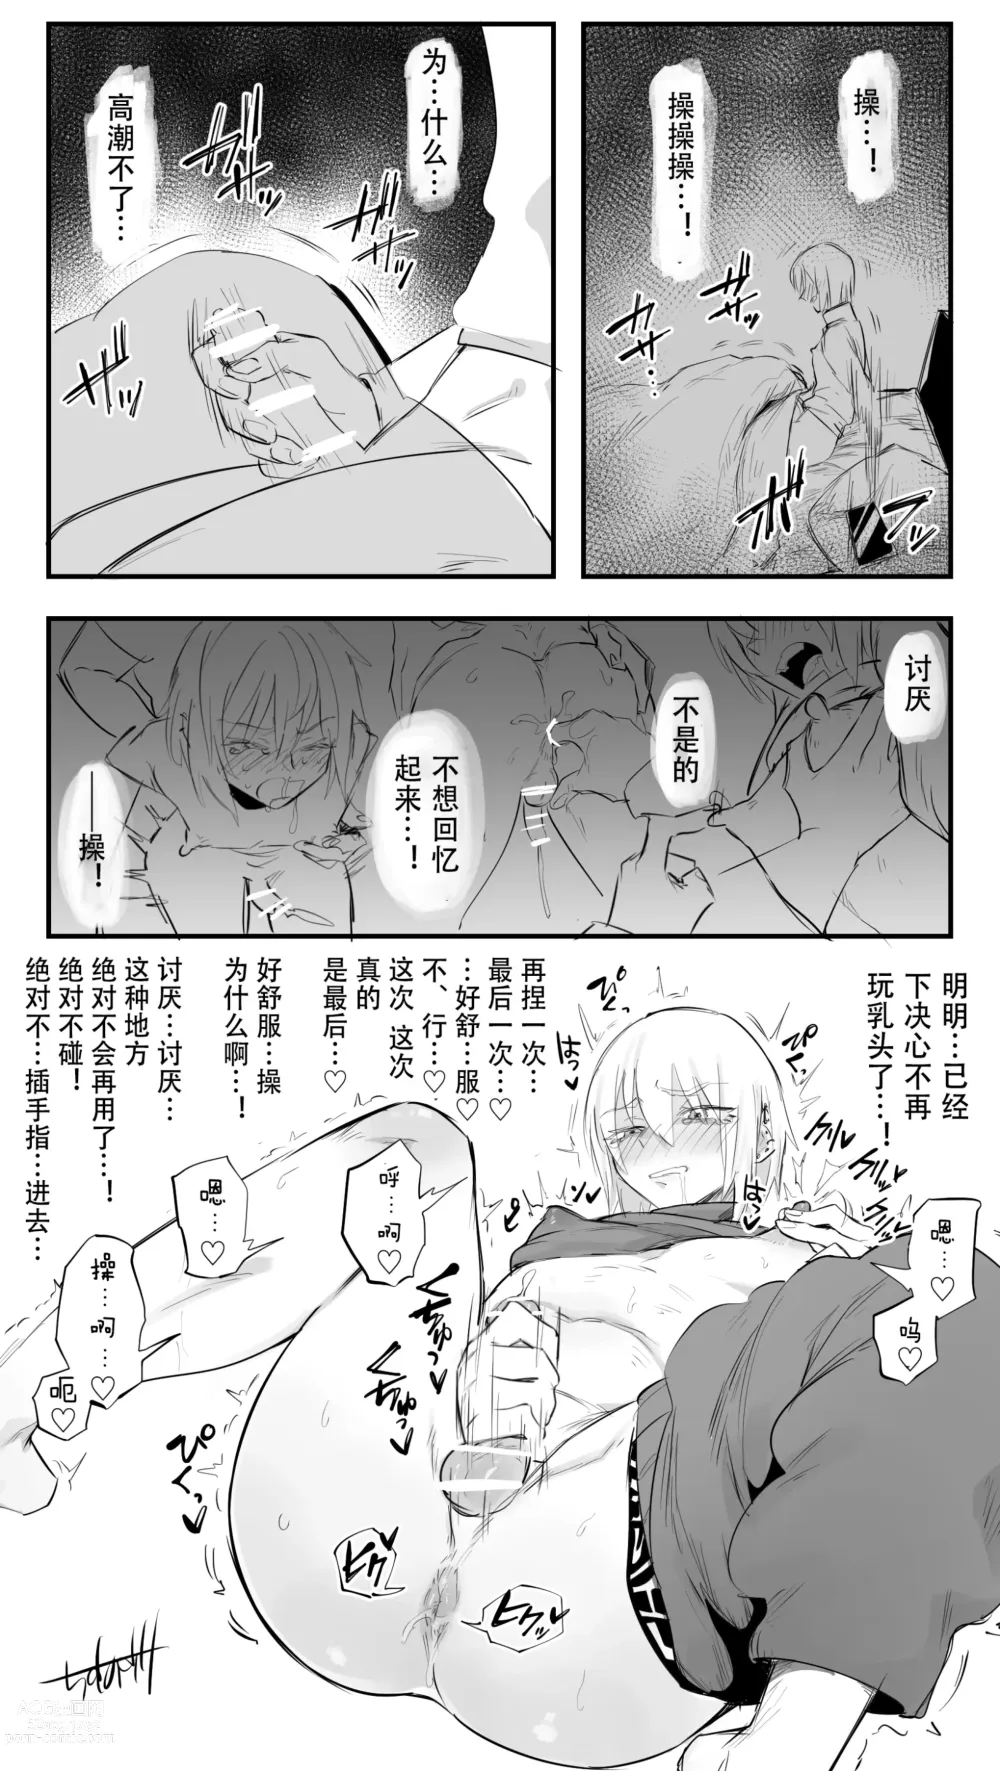 Page 20 of manga Umeme Gara Series